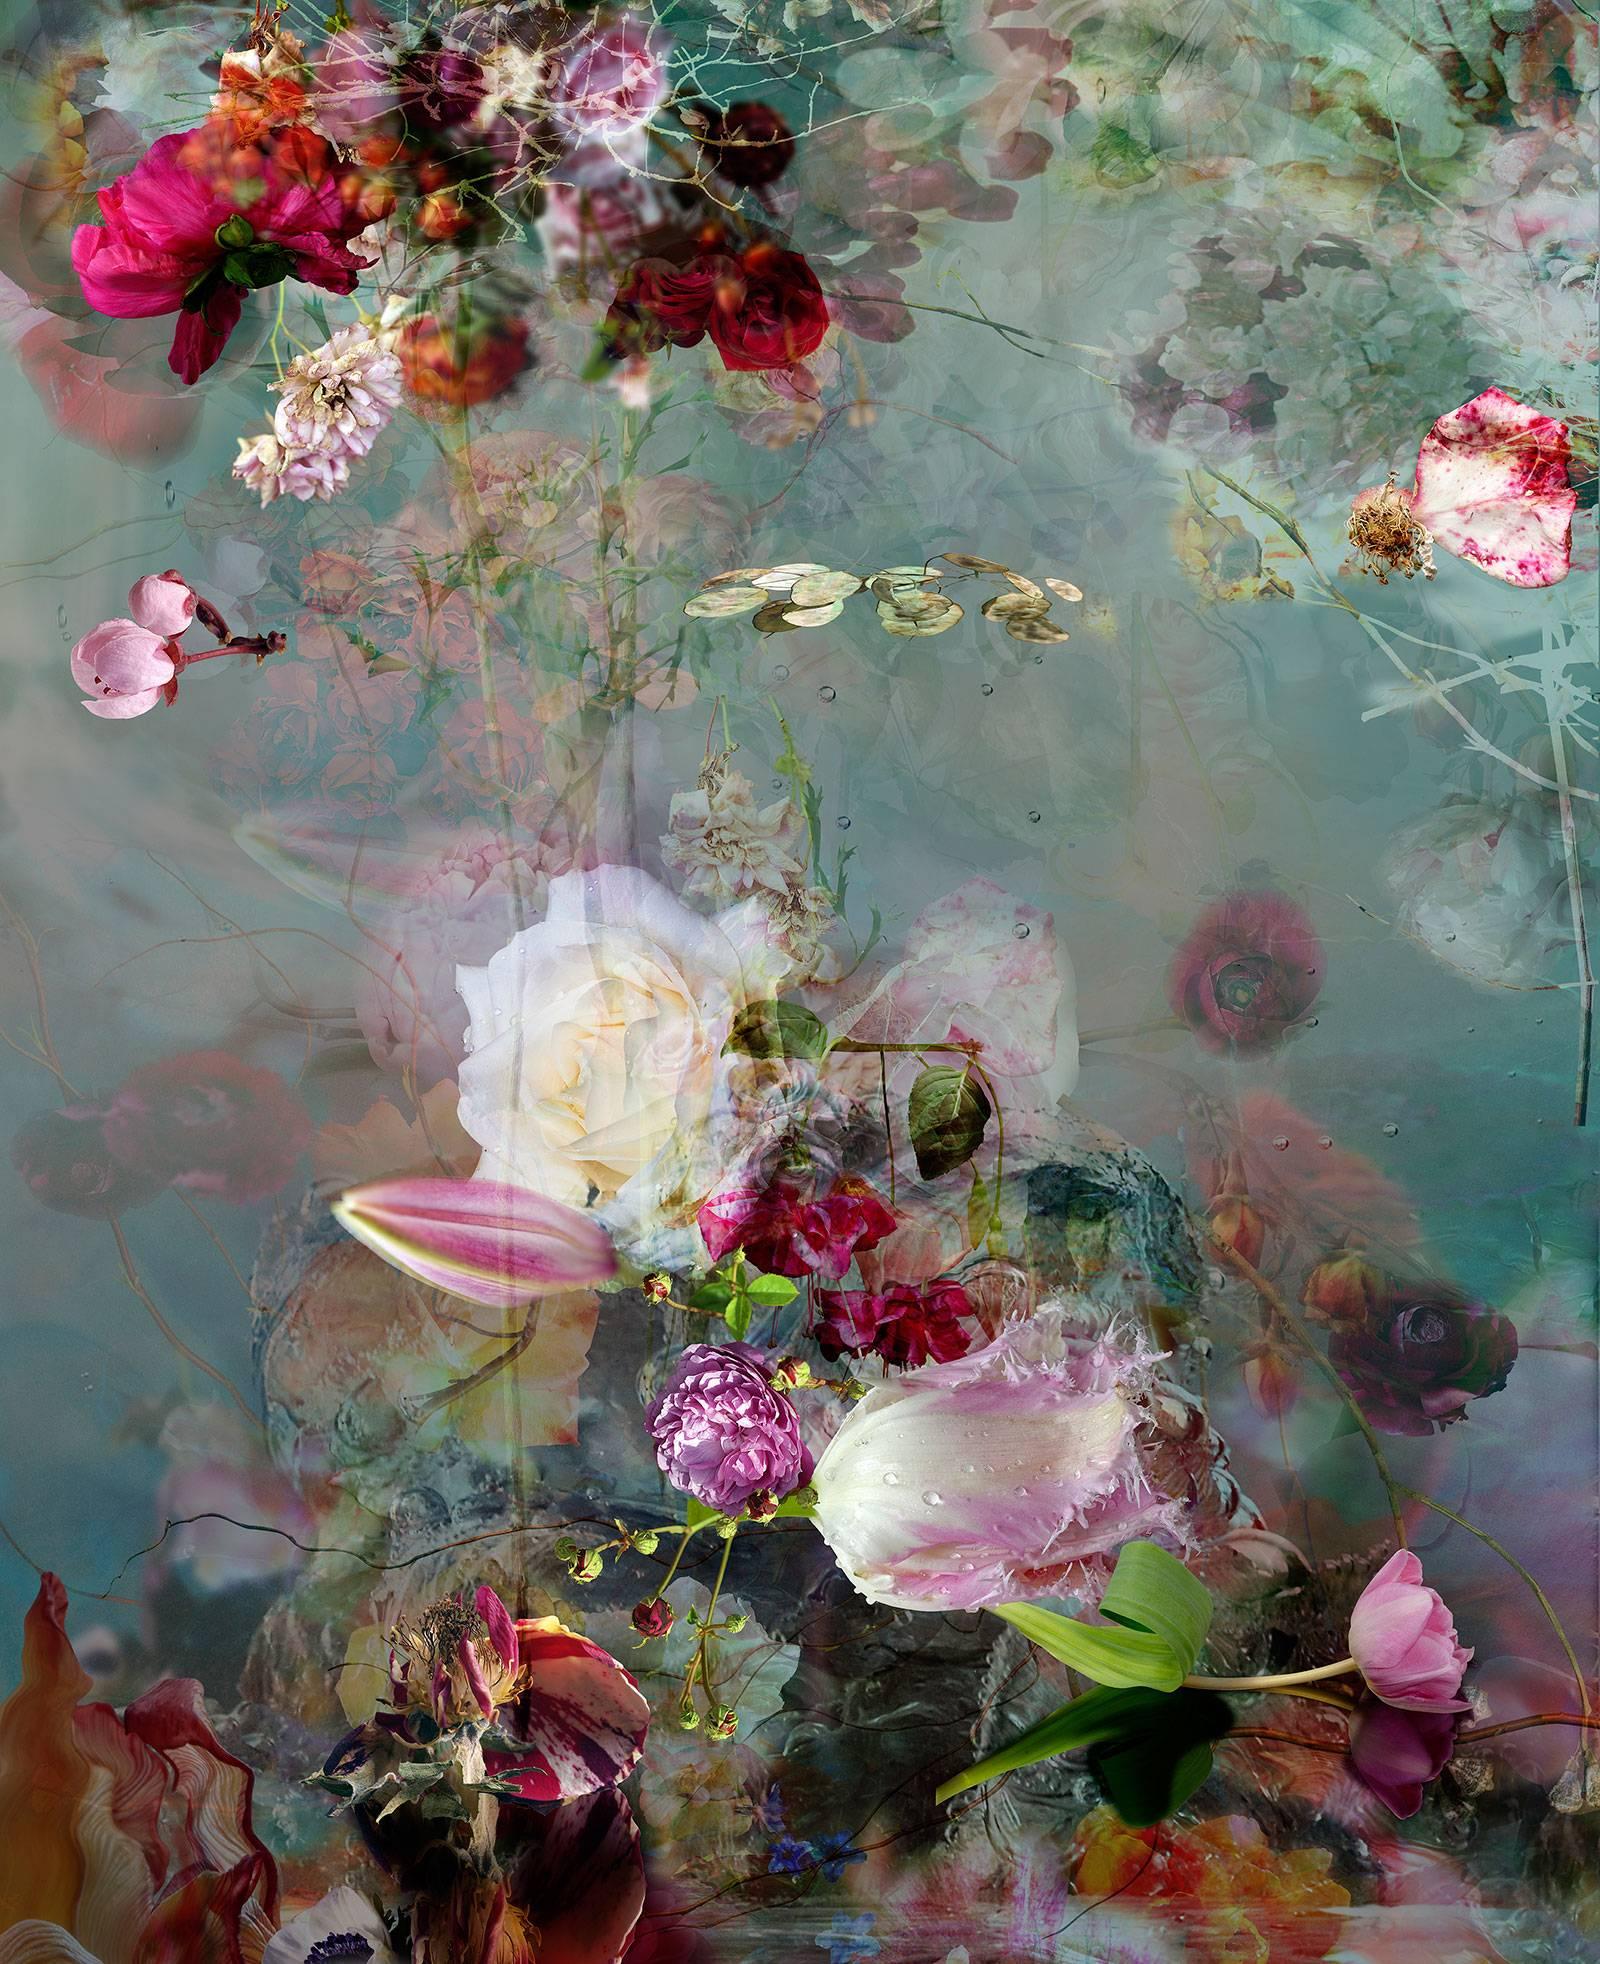 Isabelle Menin Still-Life Photograph - Sinking #1 - Floral still life contemporary photography